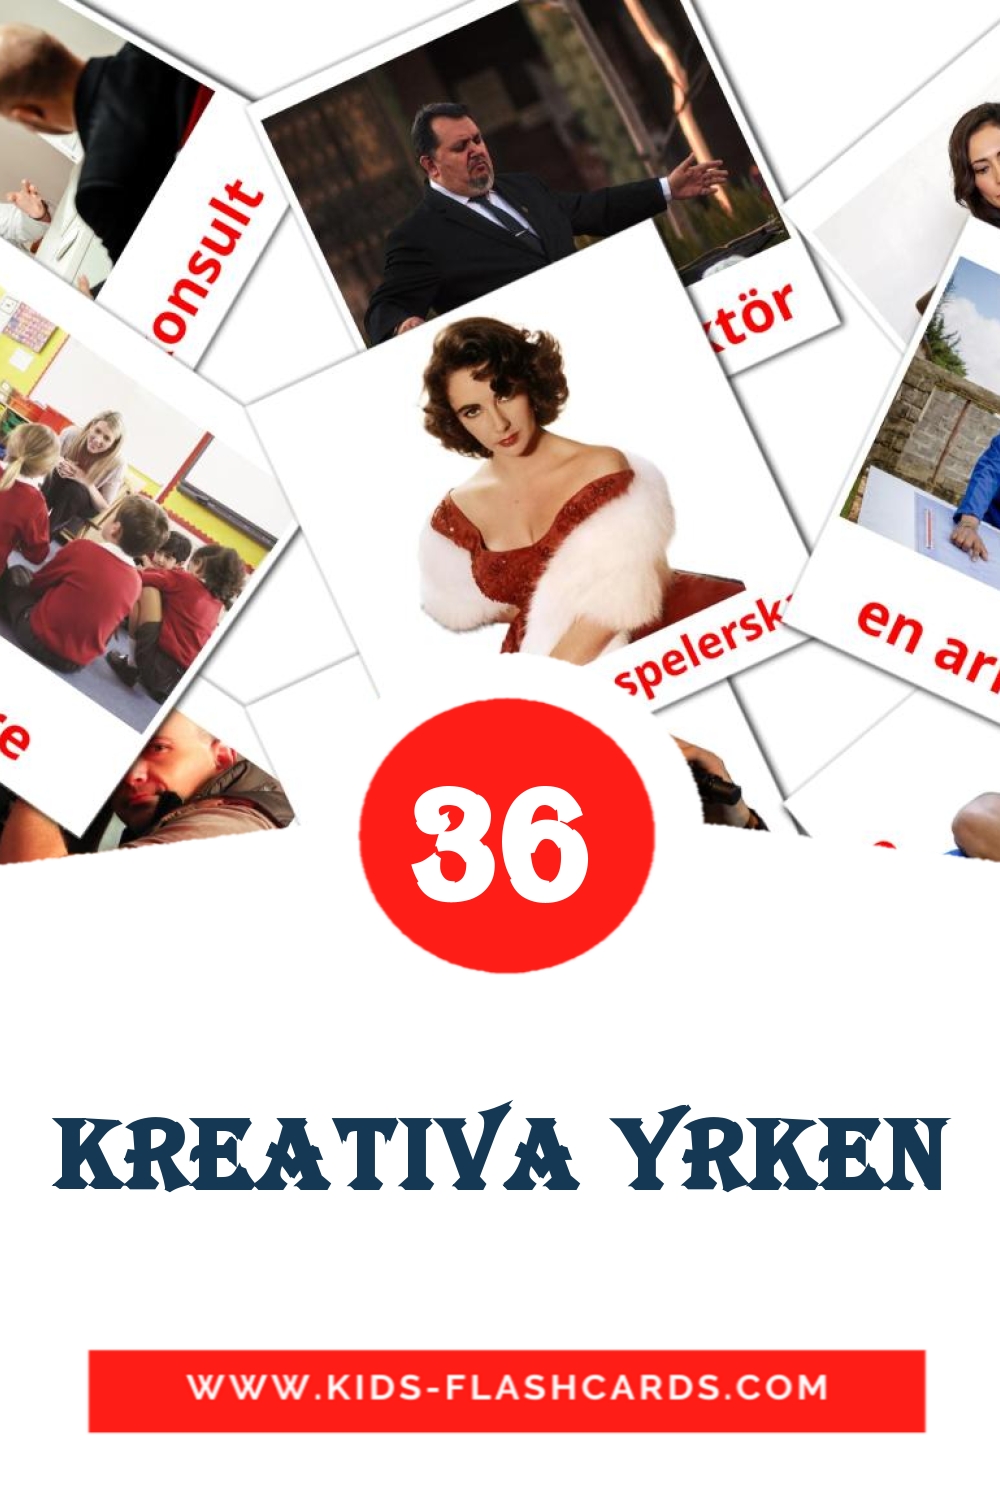 Kreativa yrken на шведском для Детского Сада (36 карточек)